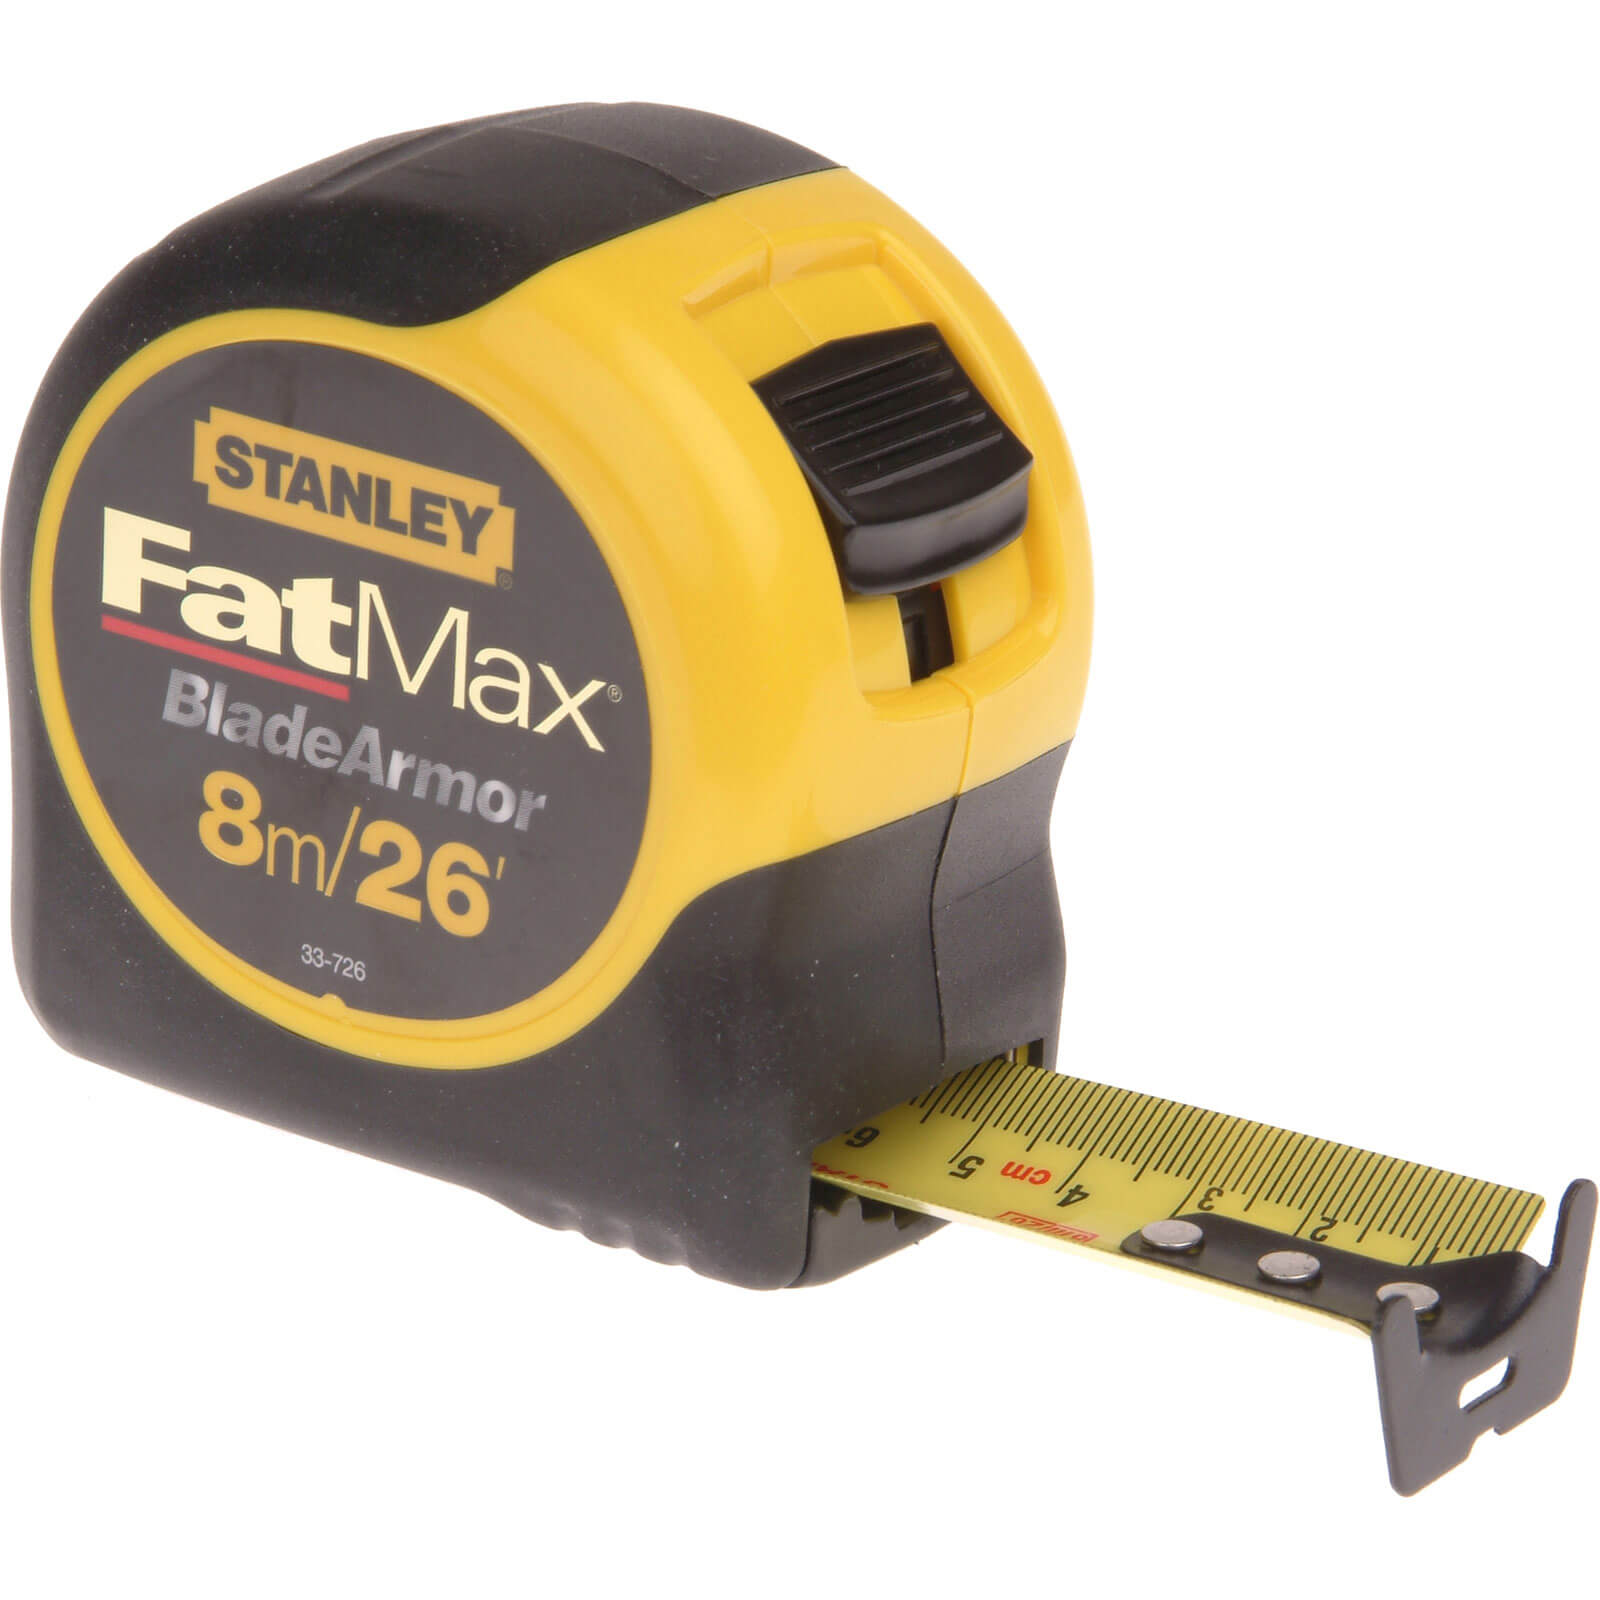 Image of Stanley Fatmax Blade Armor Tape Measure Imperial & Metric 26ft / 8m 32mm